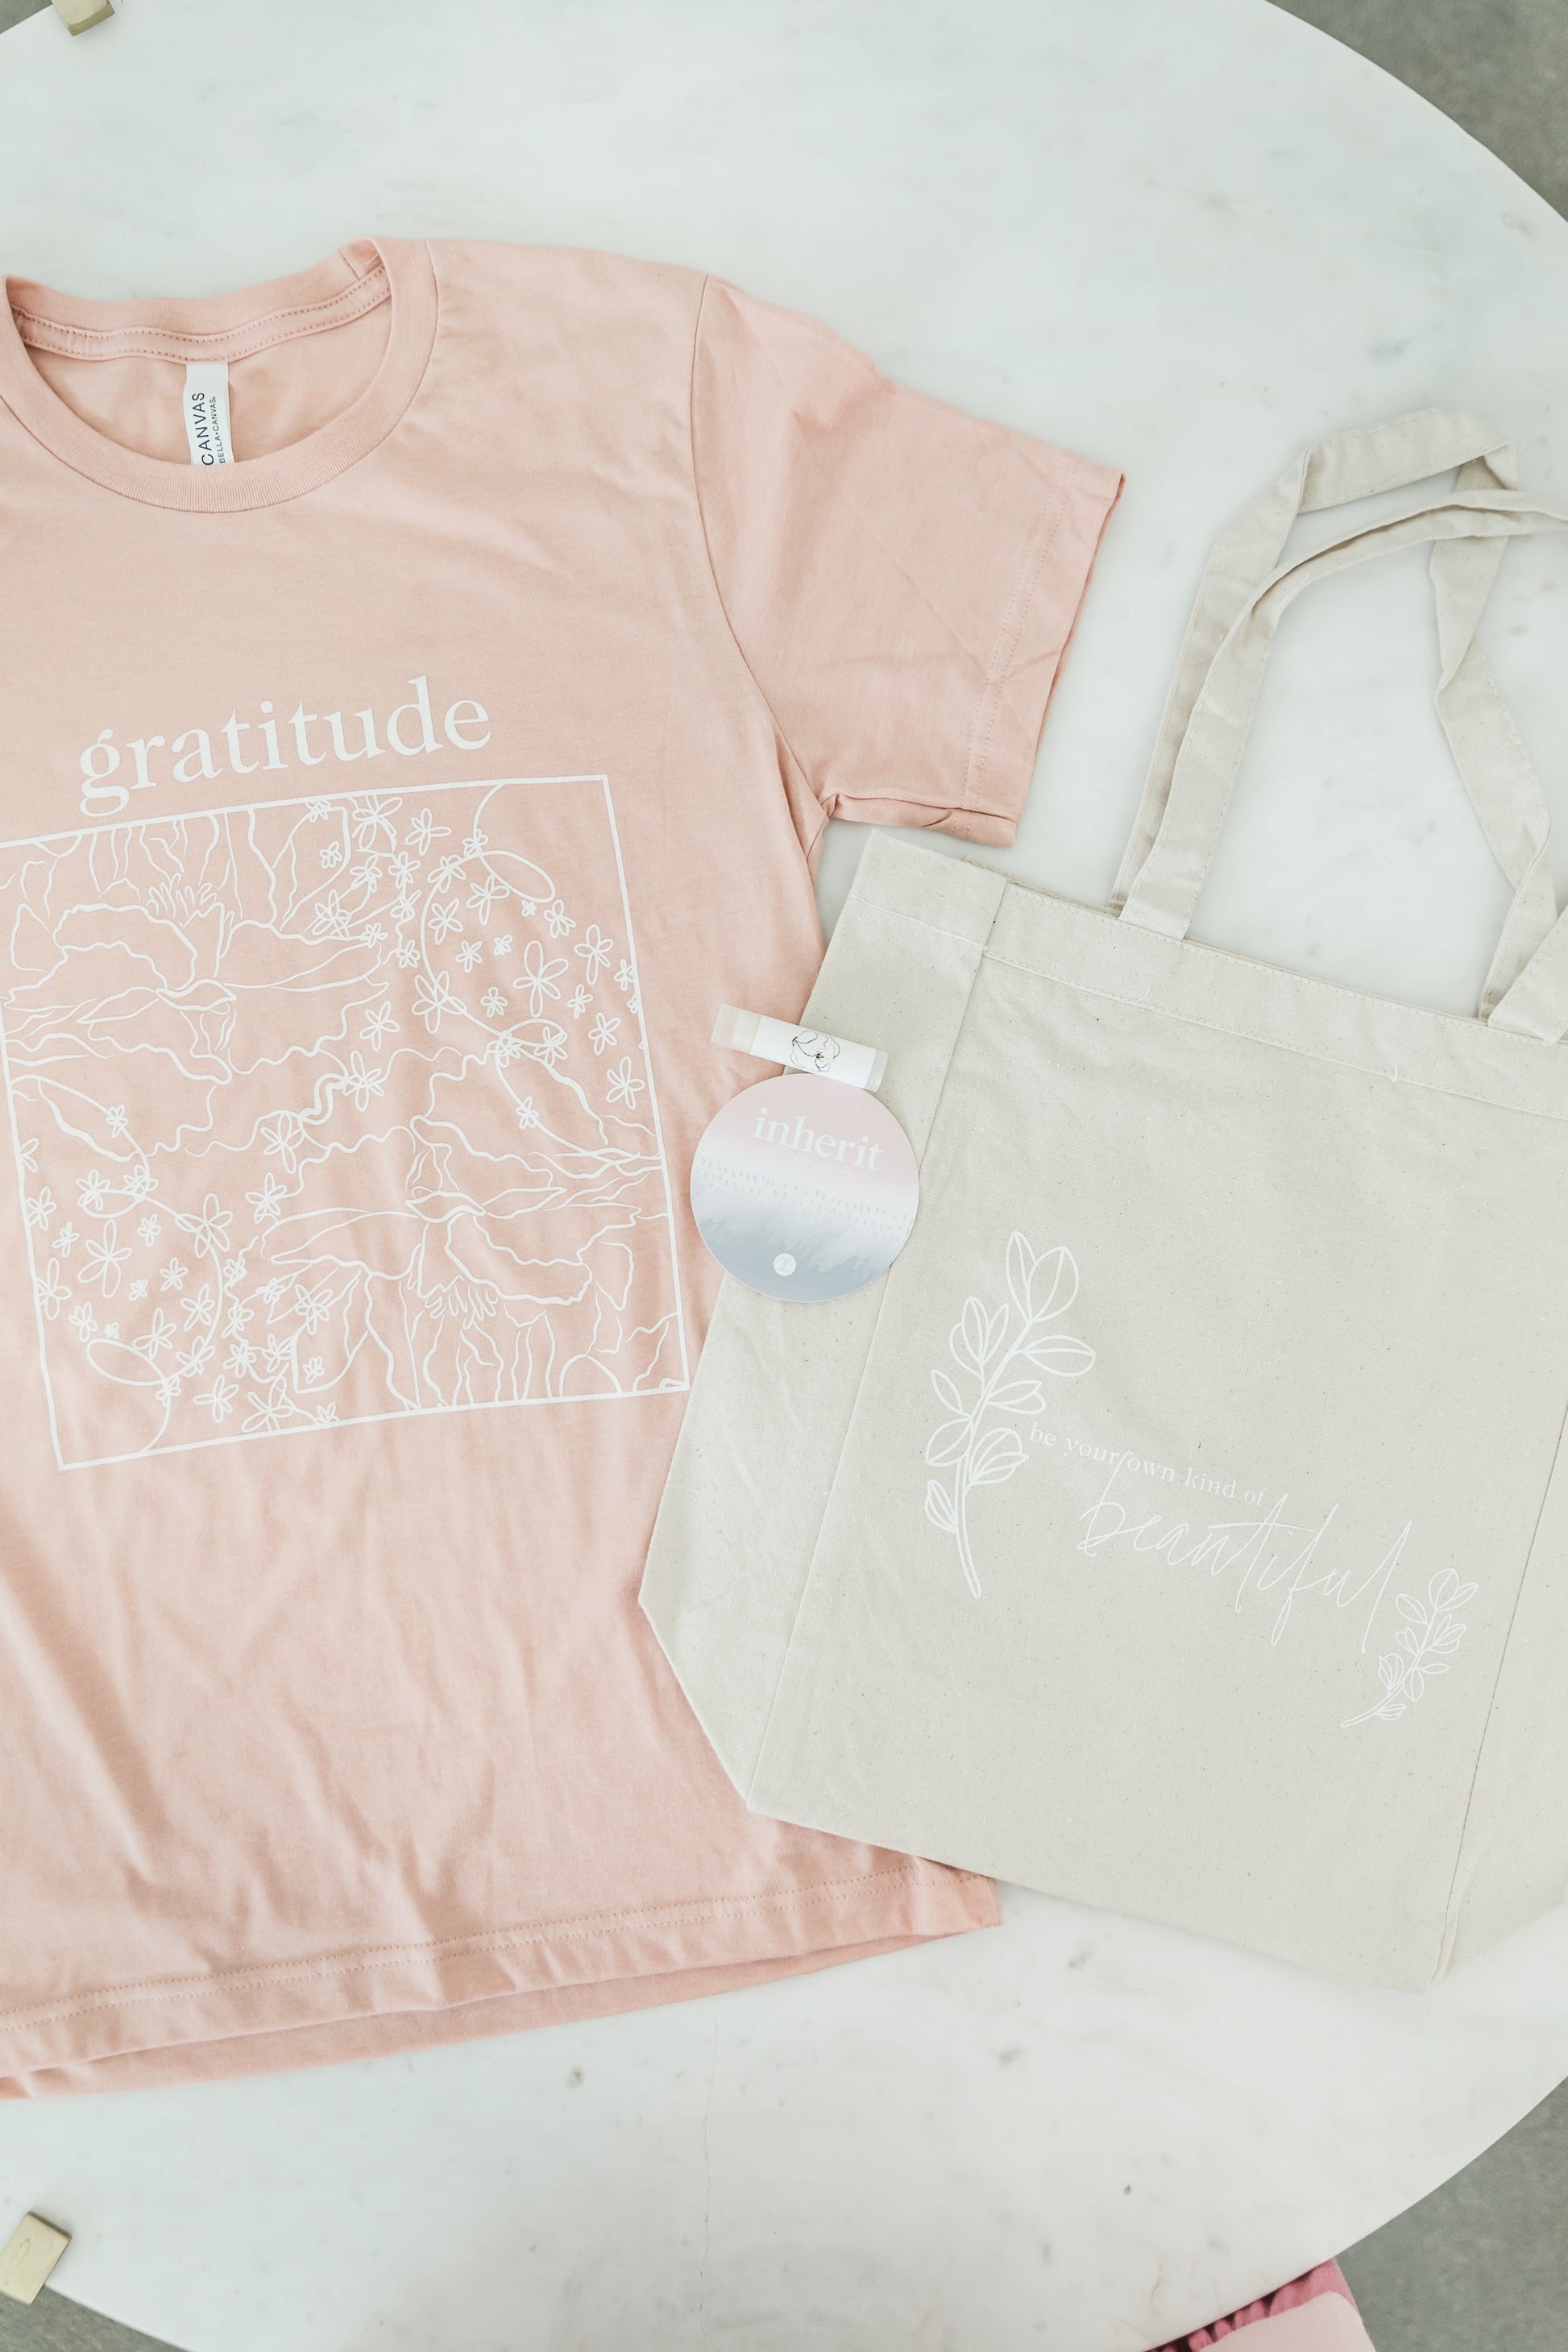 Gratitude Gift Bundle - FINAL SALE Home & Lifestyle